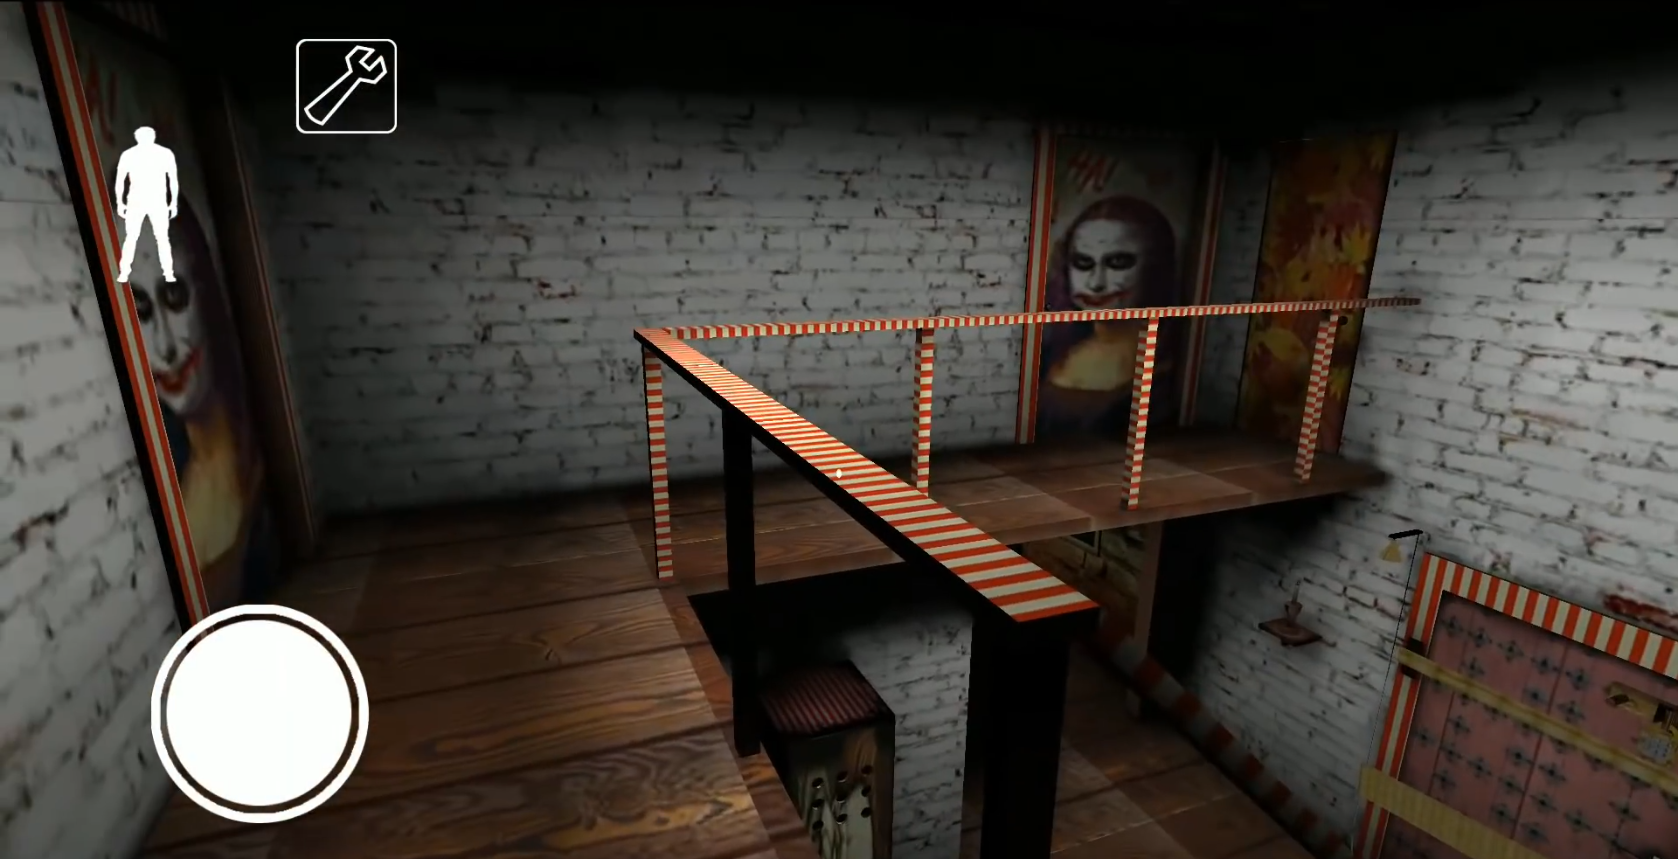 Screenshot 1 of Pennywise! Evil Clown - Jogos de Terror 2019 